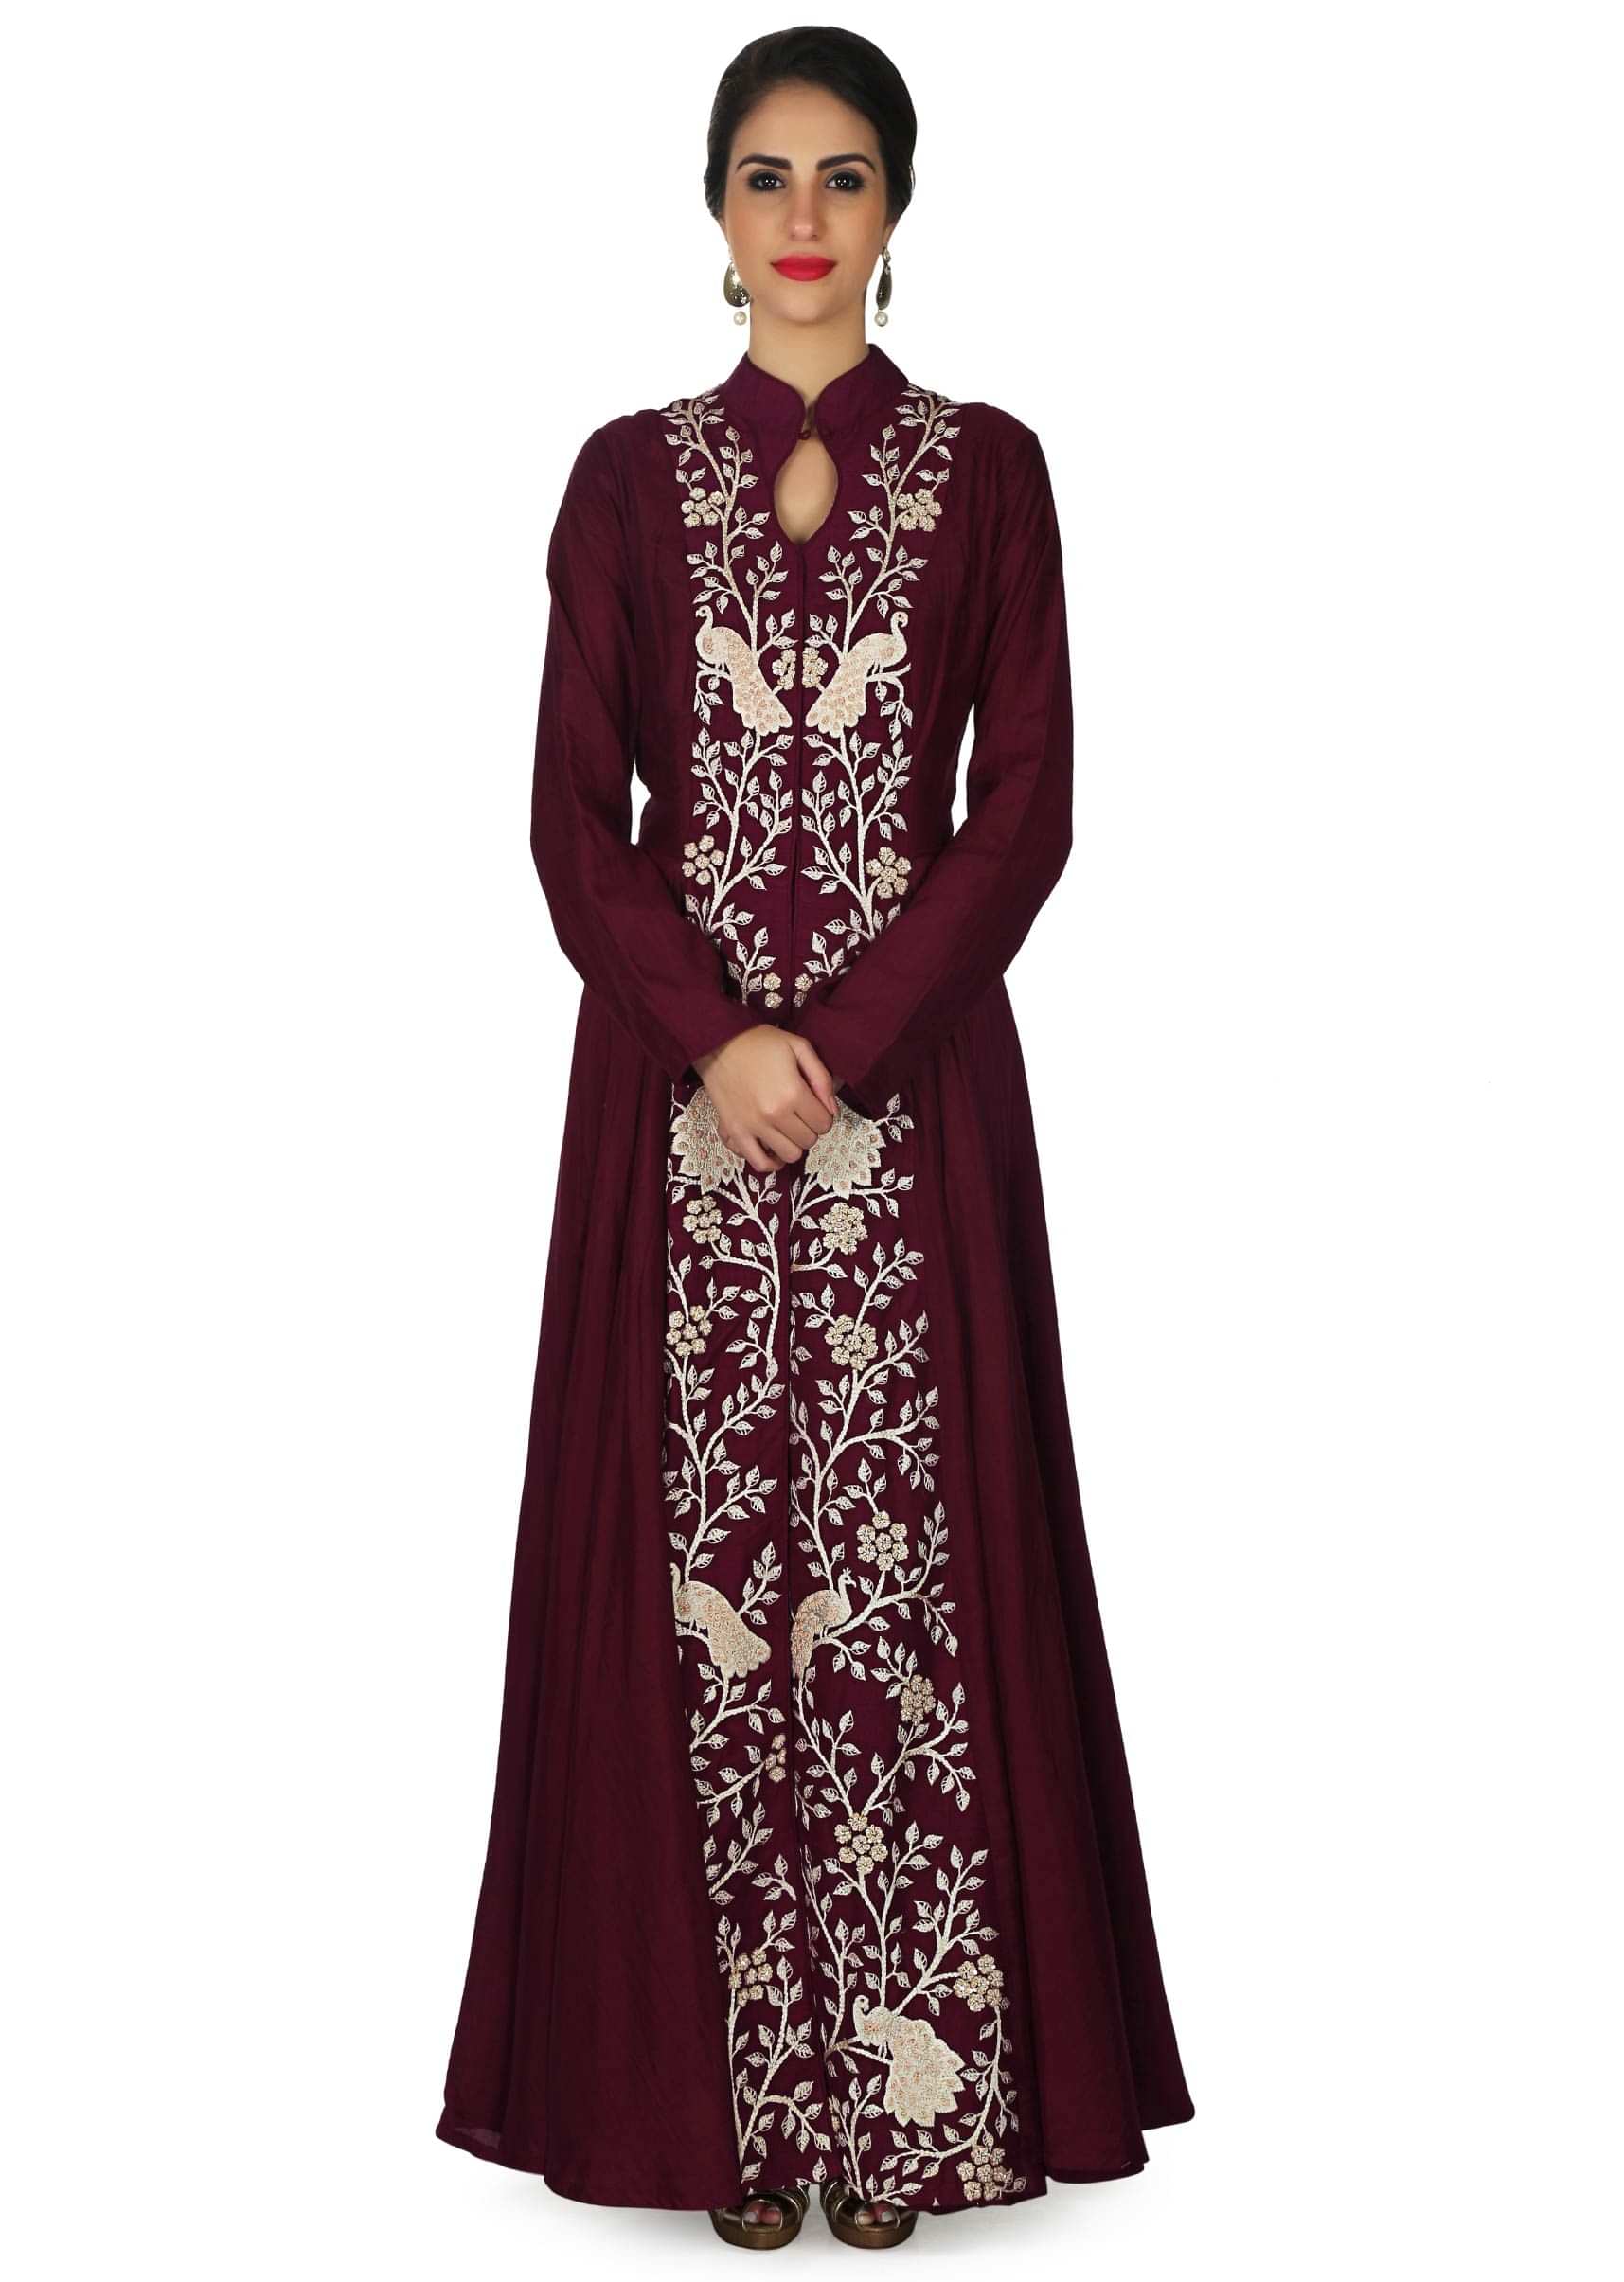 Burgundy anarkali dress embellished in thread work in peacock motif only on Kalki